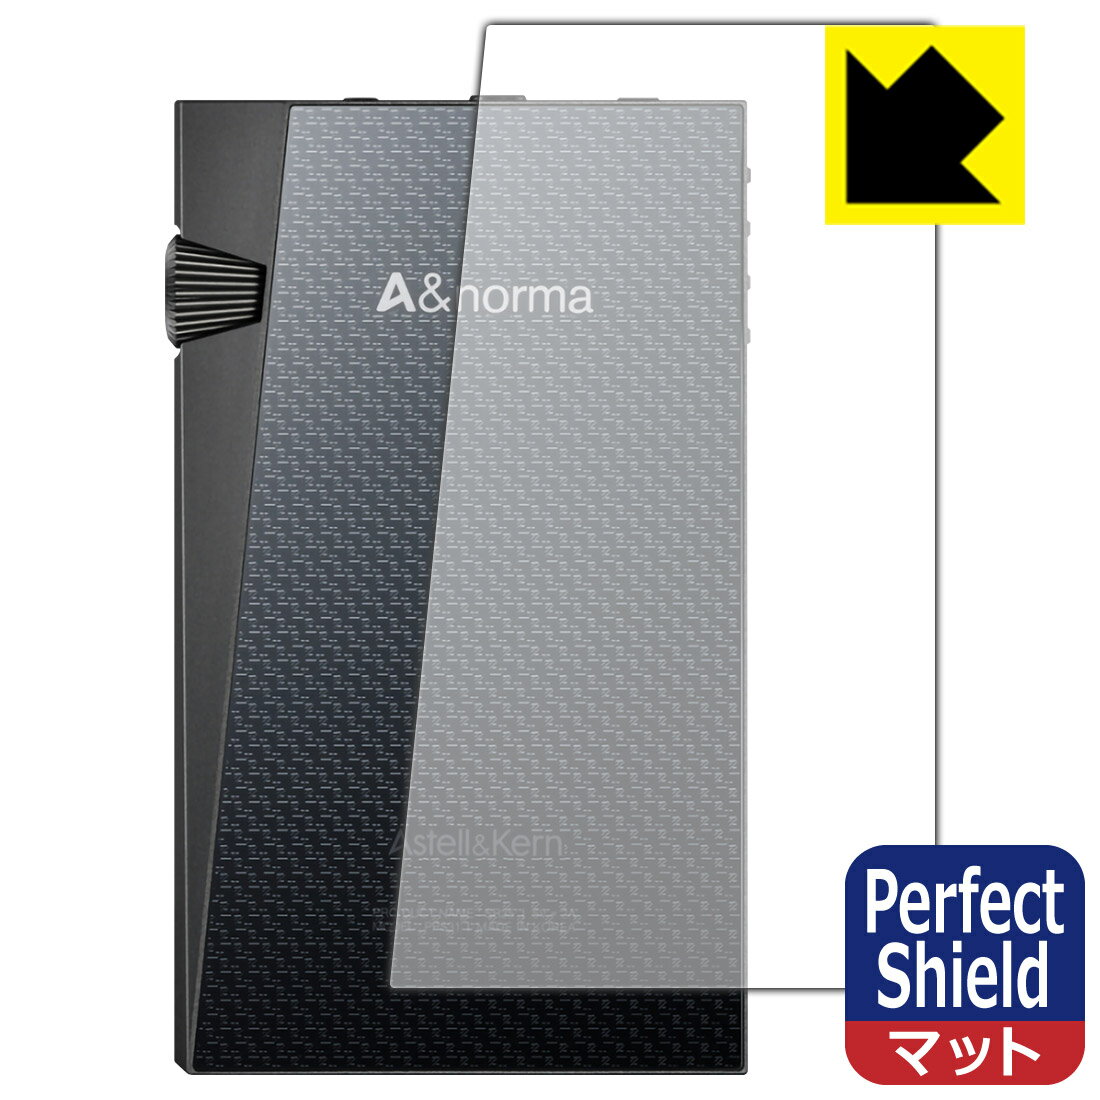 Perfect Shield【反射低減】保護フィルム Astell&Kern A&norma SR35 (背面用) 3枚セット 日本製 自社製造直販